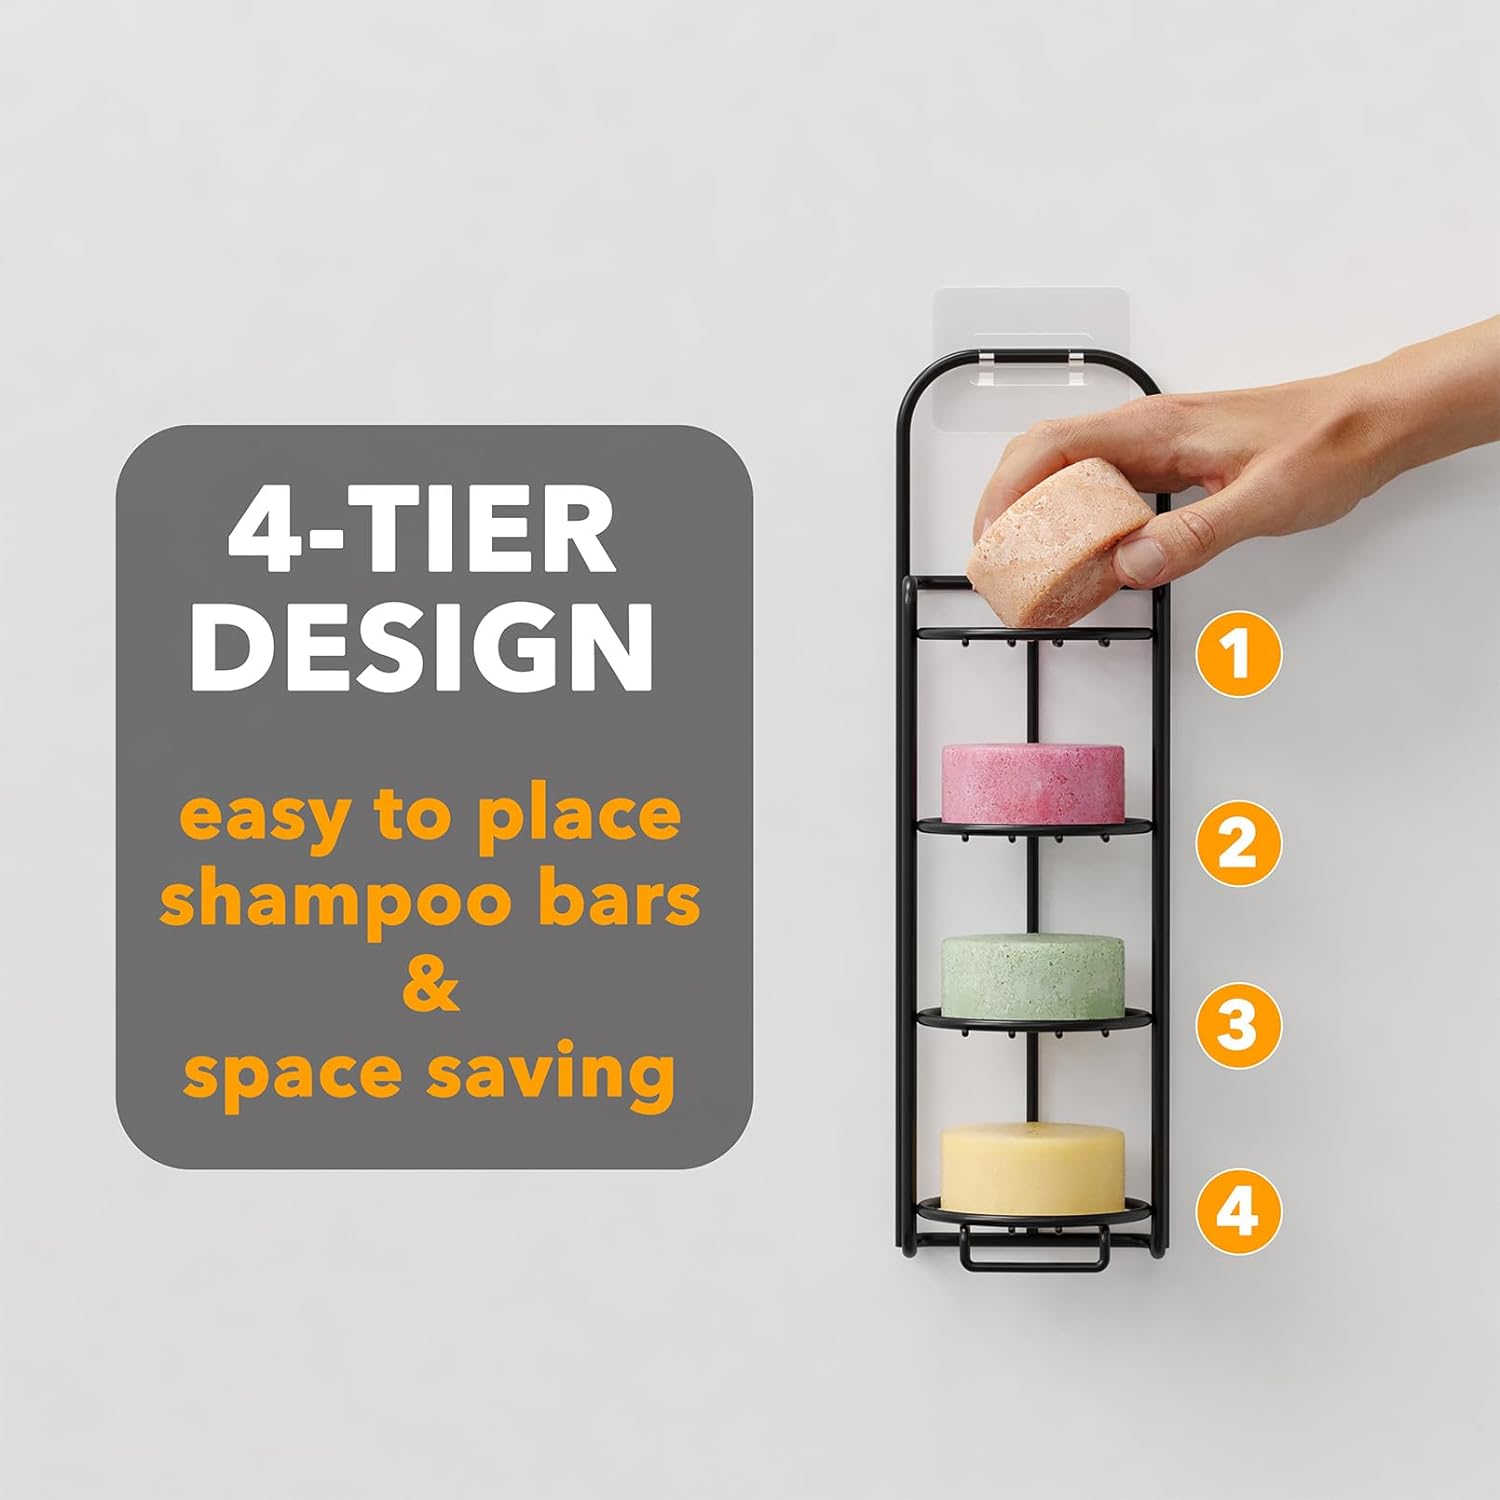 SpaceAid 4 Tier Shampoo Bar Holder for Shower, Self Draining Soap Bar Holders Caddy for Bathroom Wall and Kitchen Sink, Shampoo Bar Dish Rack